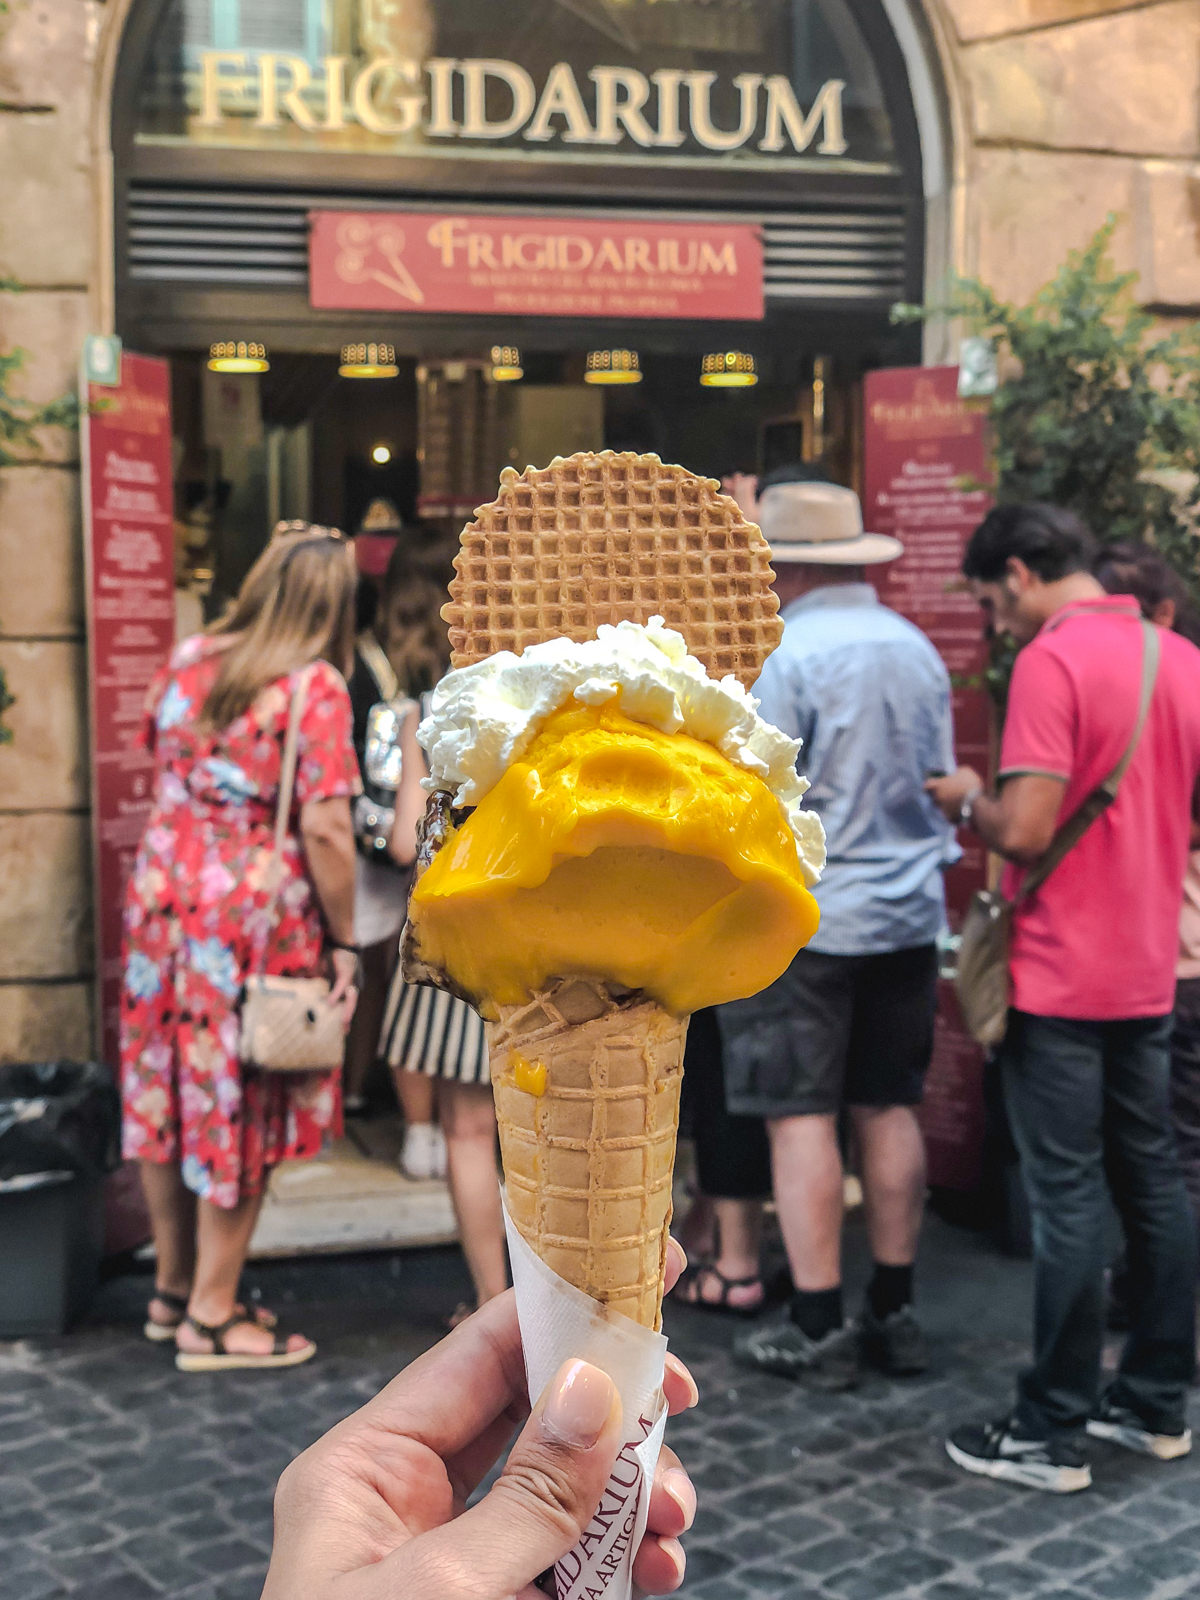 mango gelato on a cone from frigidarium